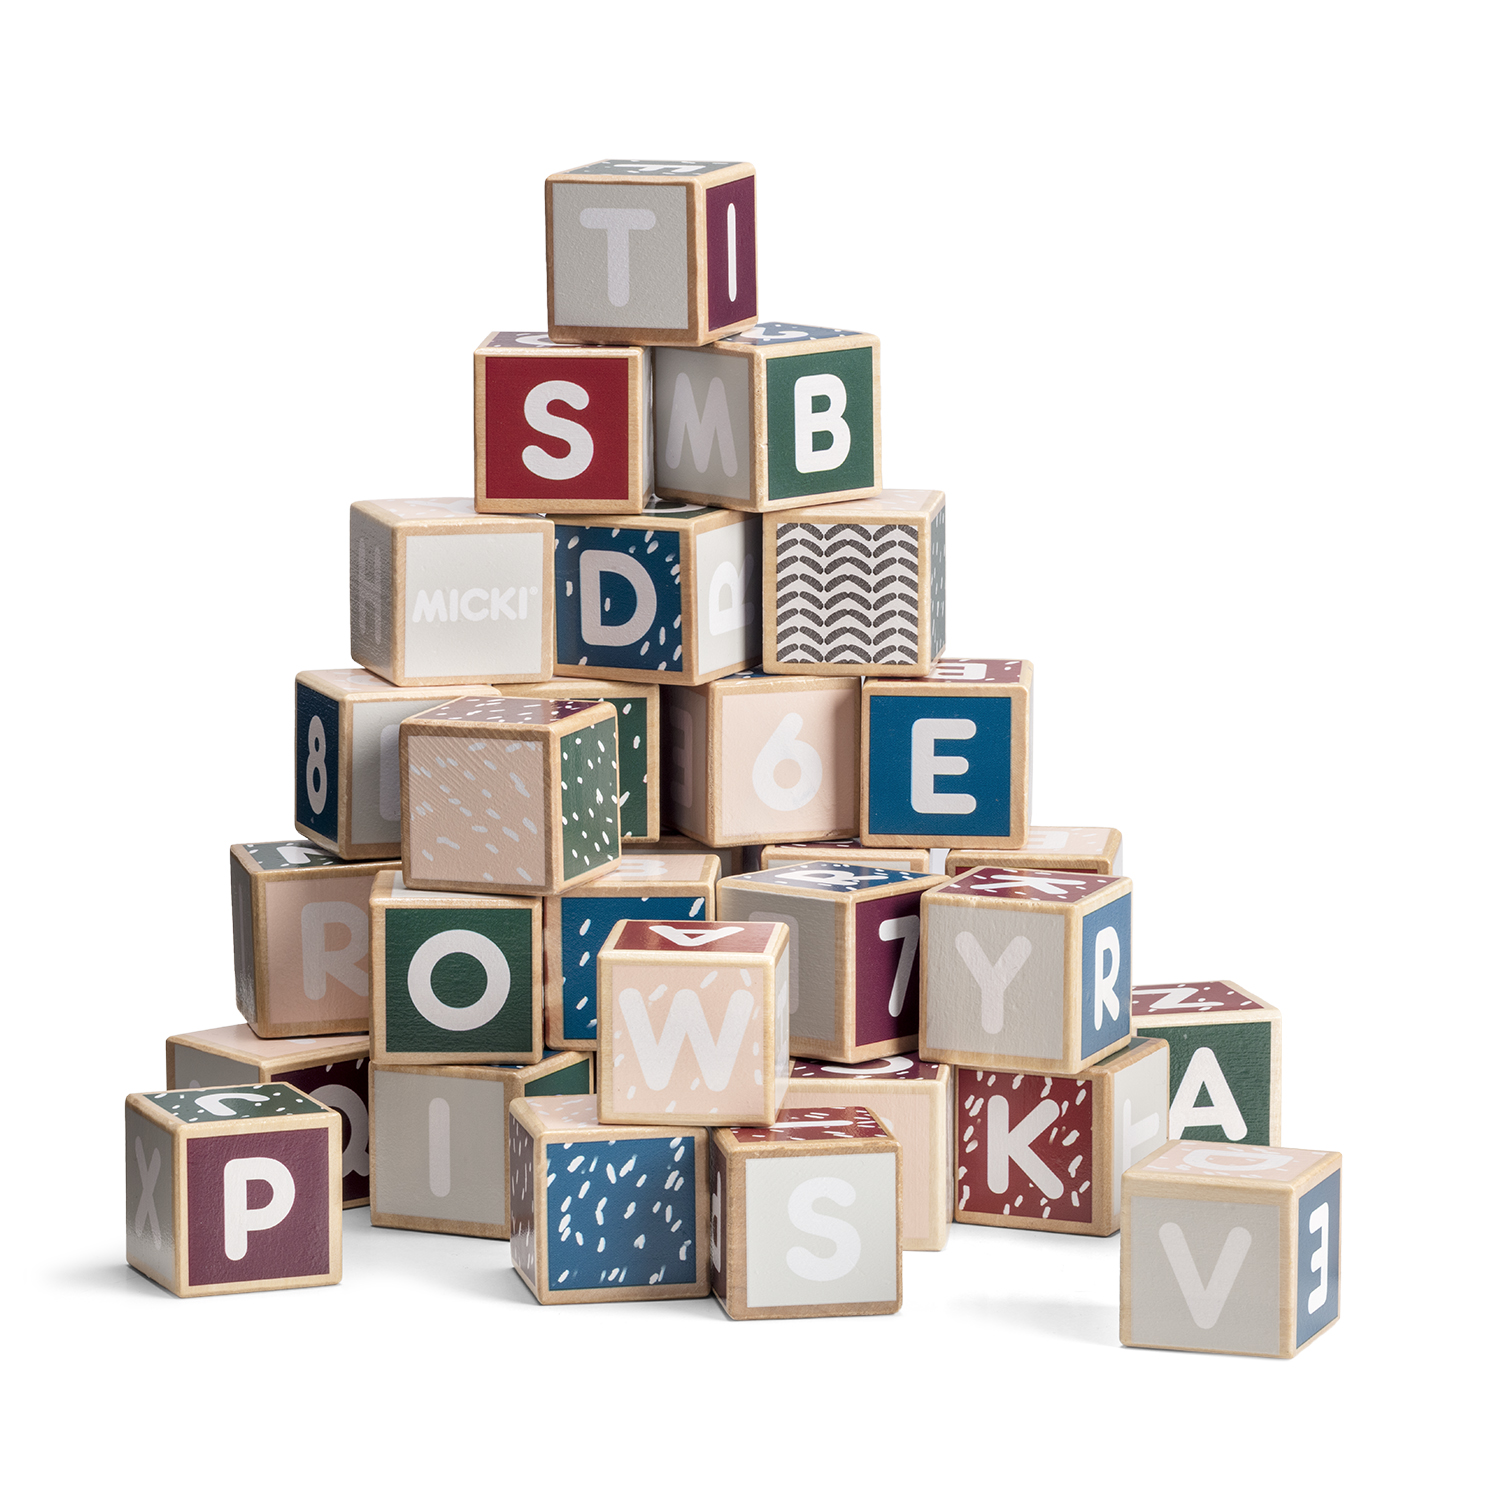 Building blocks micki decorative letter blocks 36 pieces